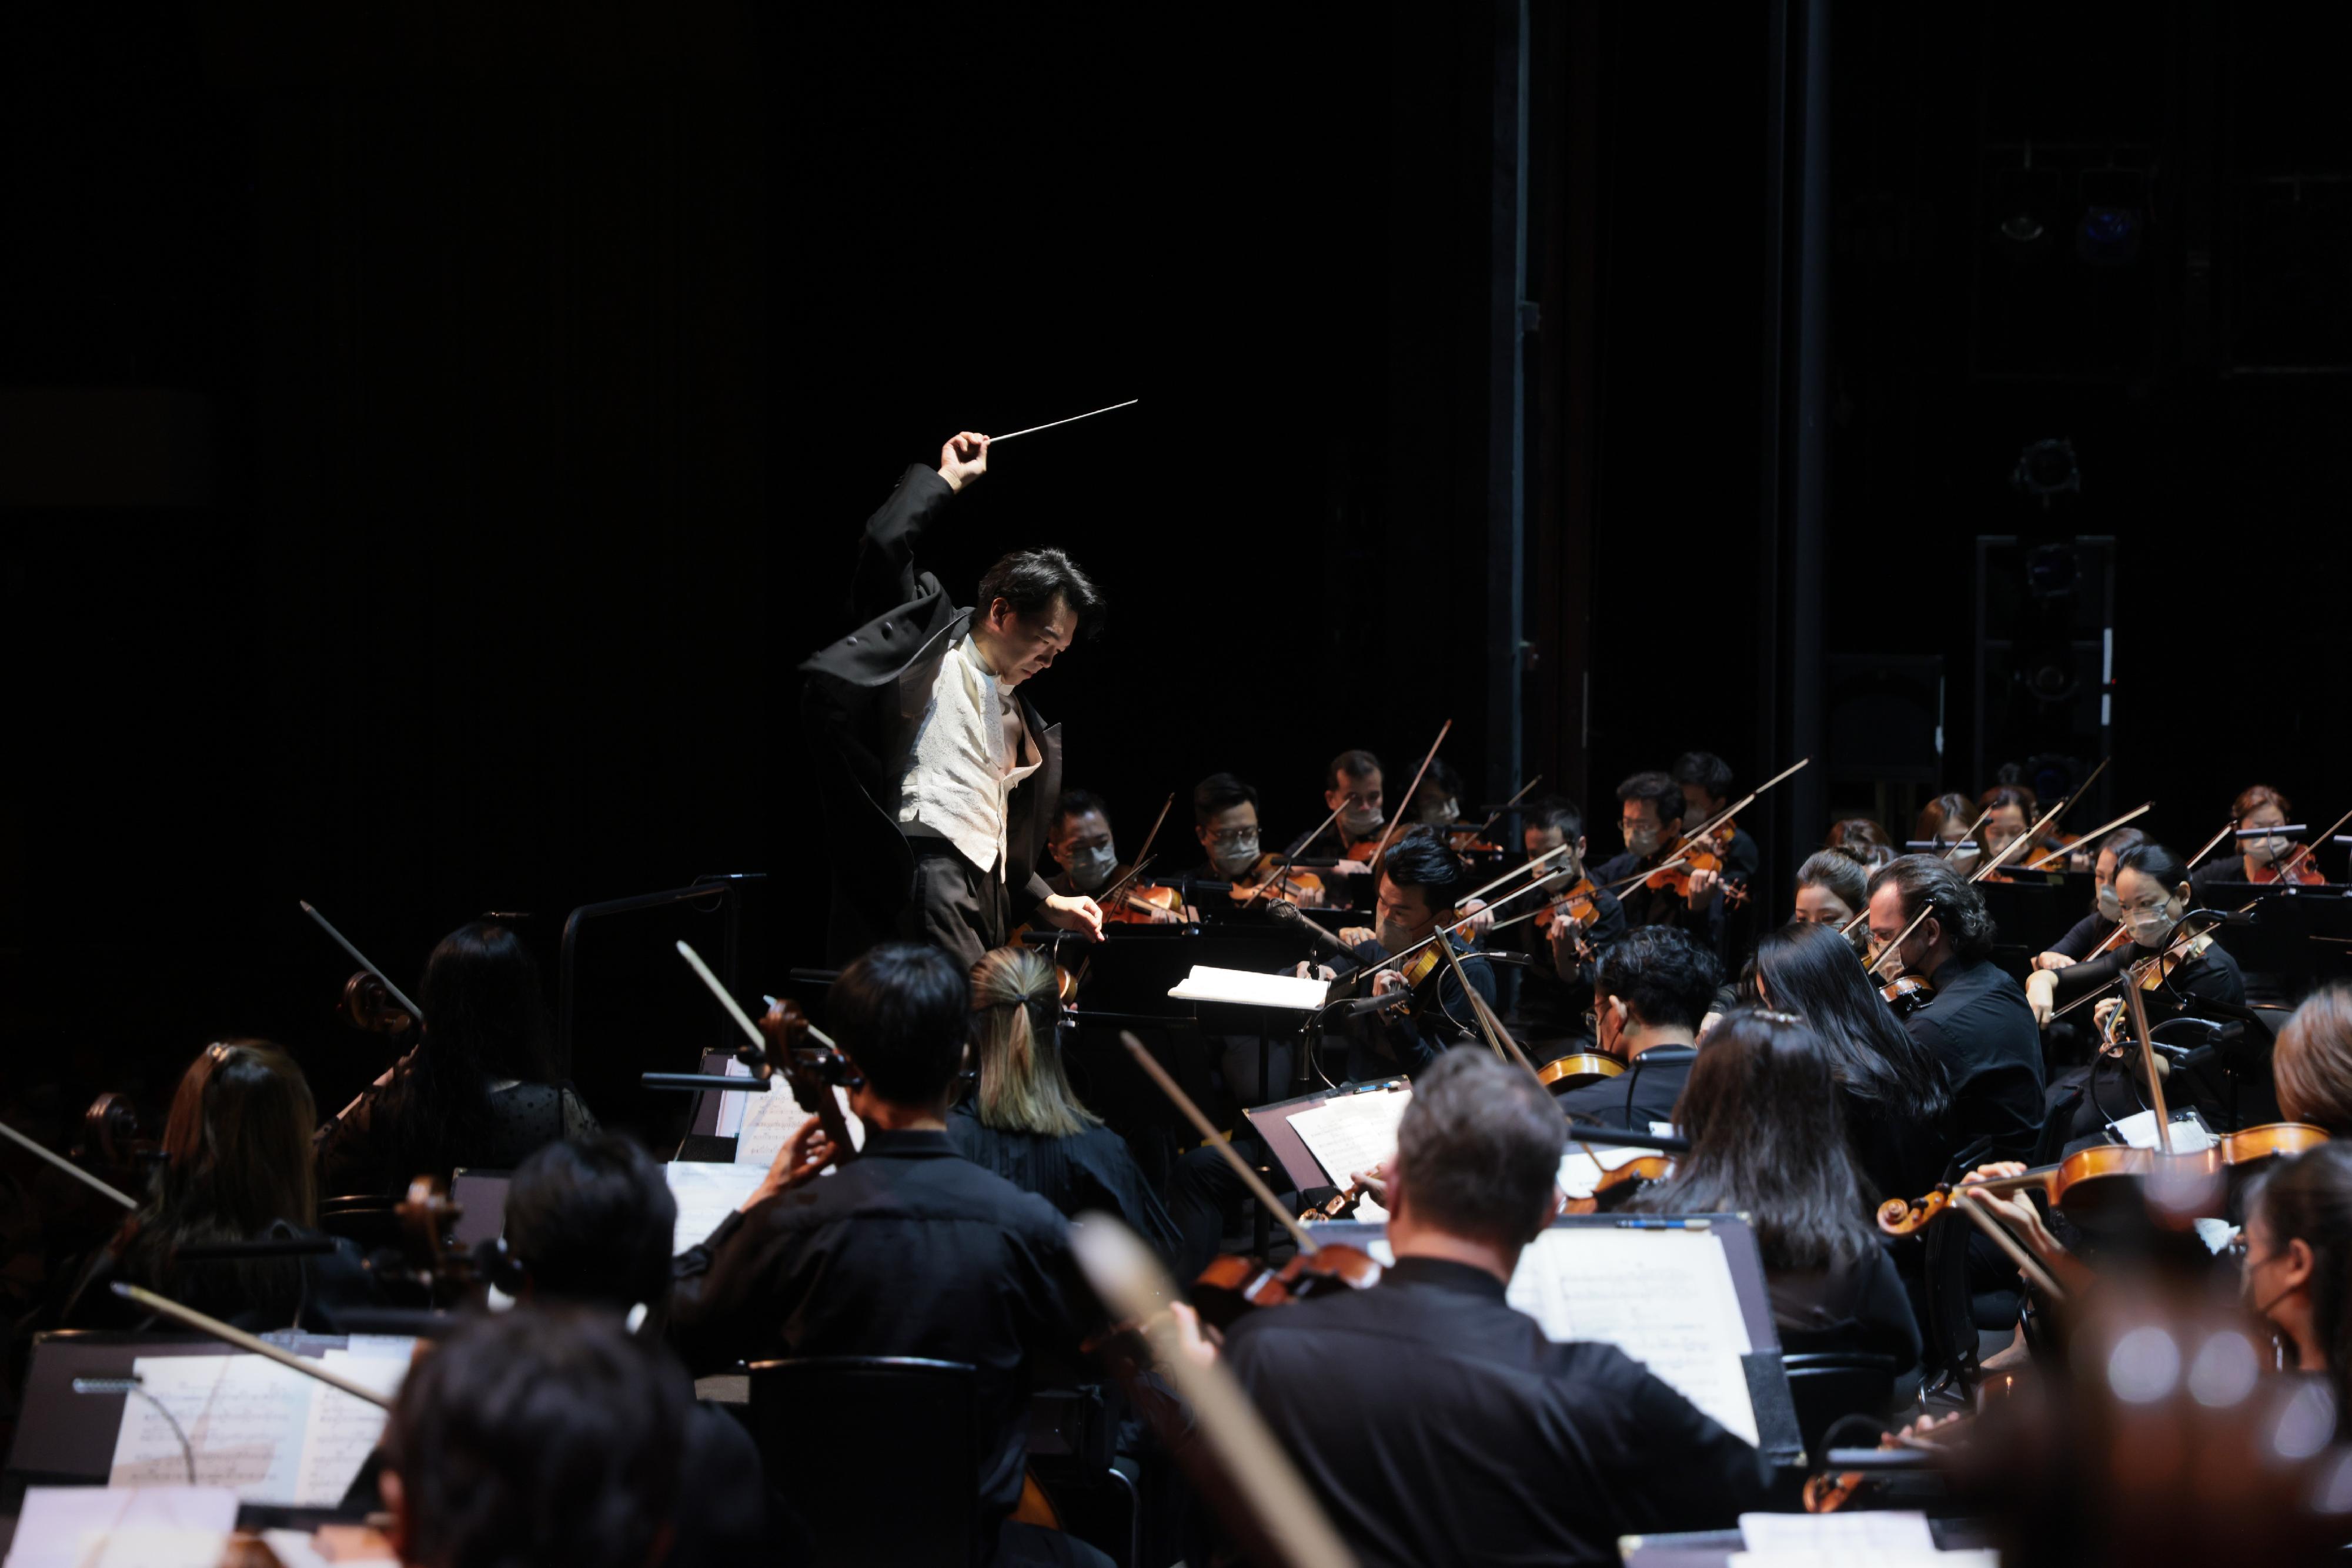 The Hong Kong Week 2023@Bangkok will be held in Bangkok, Thailand, from October 21 to November 12. The Hong Kong Philharmonic Orchestra will present the opening concert "Shostakovich Piano Concerto". (Source of photo: Keith Hiro)